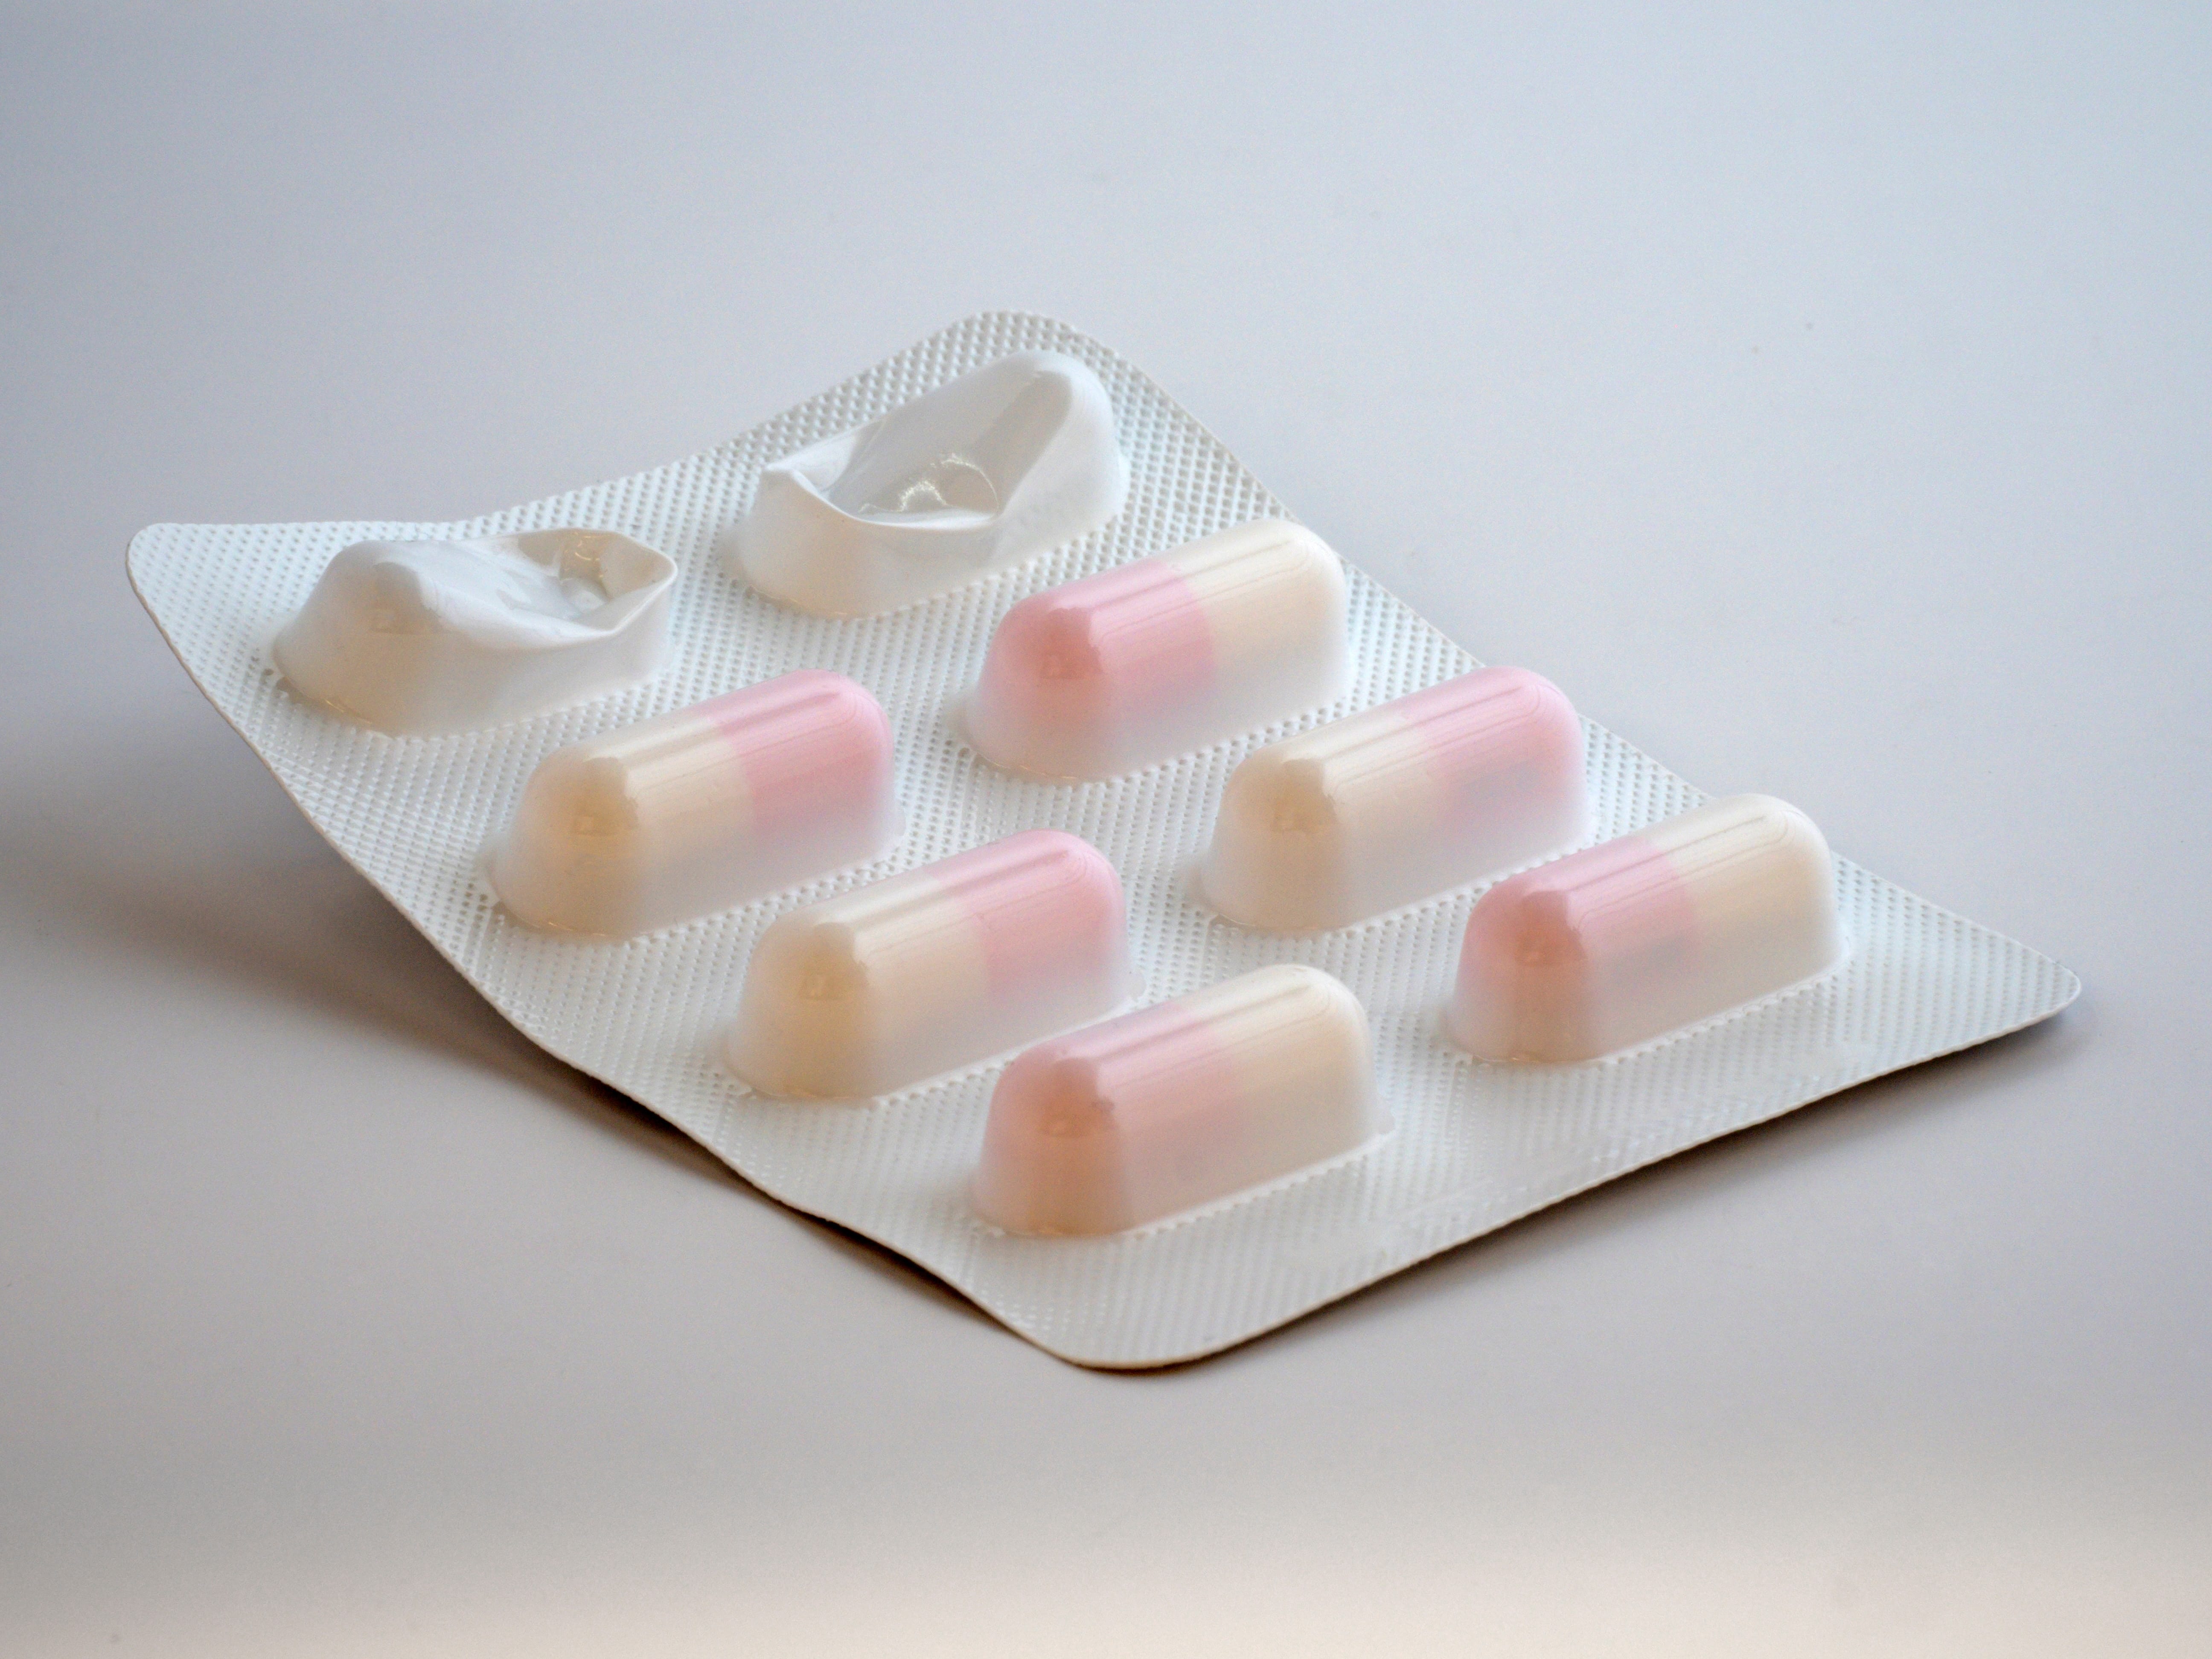 Blister pack of medications with two capsules gone; image by Brett Jordan, via Unsplash.com.